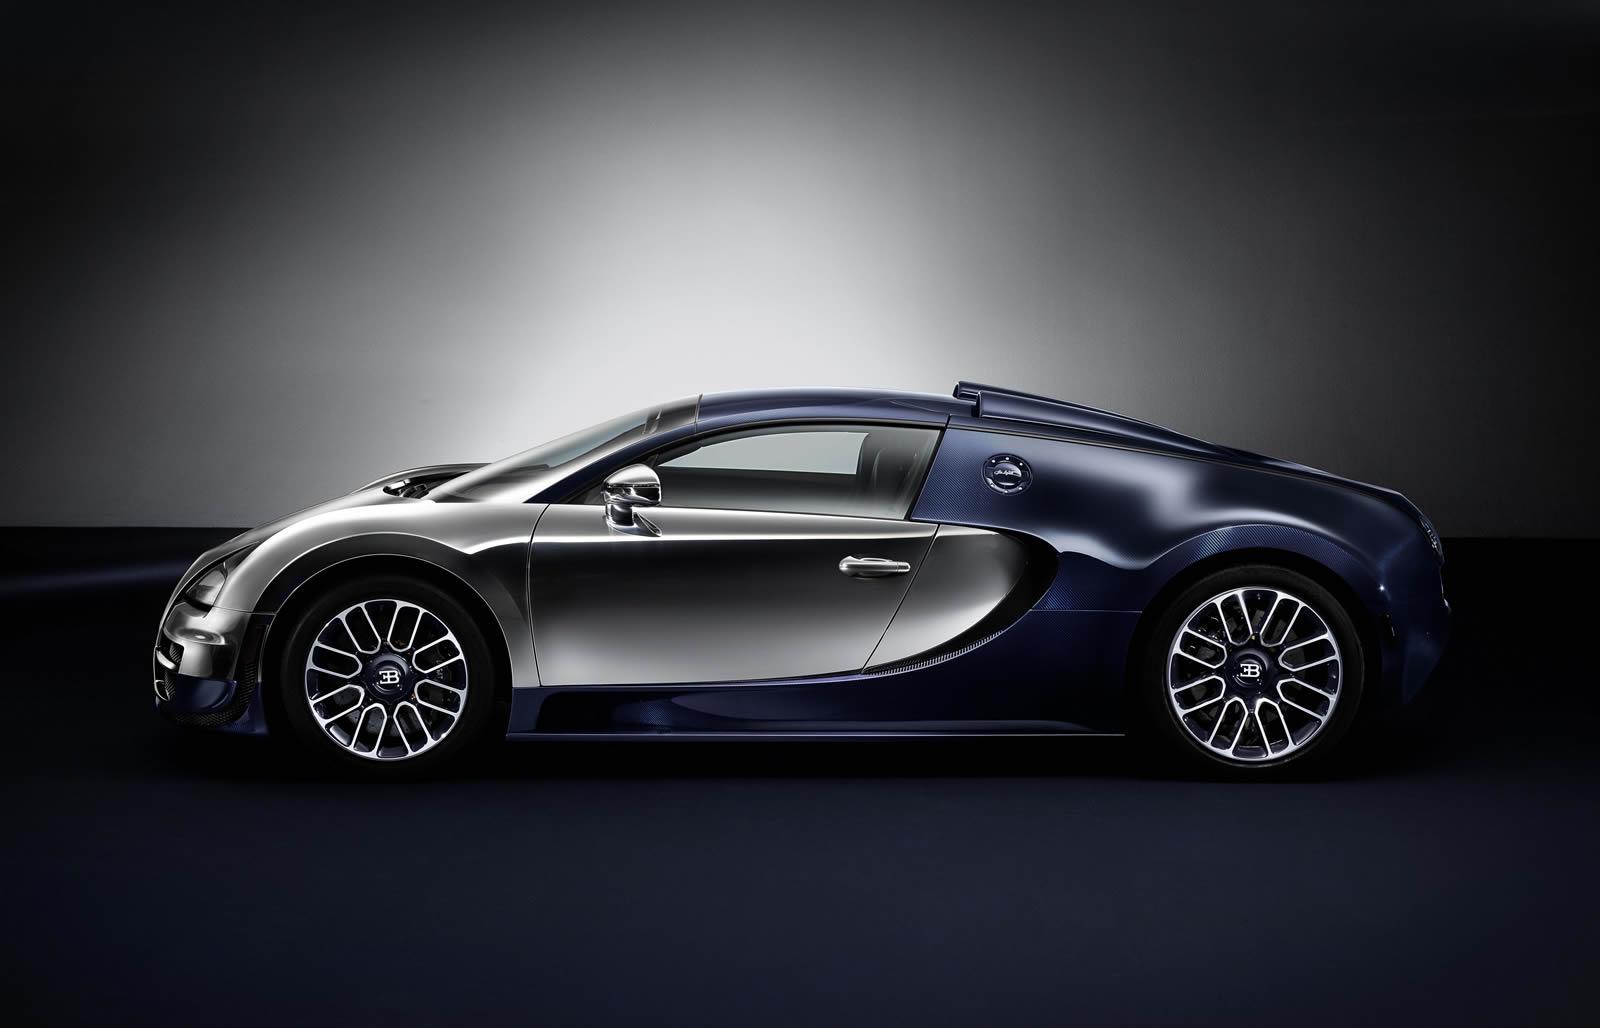 Bugatti Veyron GS Vitesse Ettore edition, last of Legends